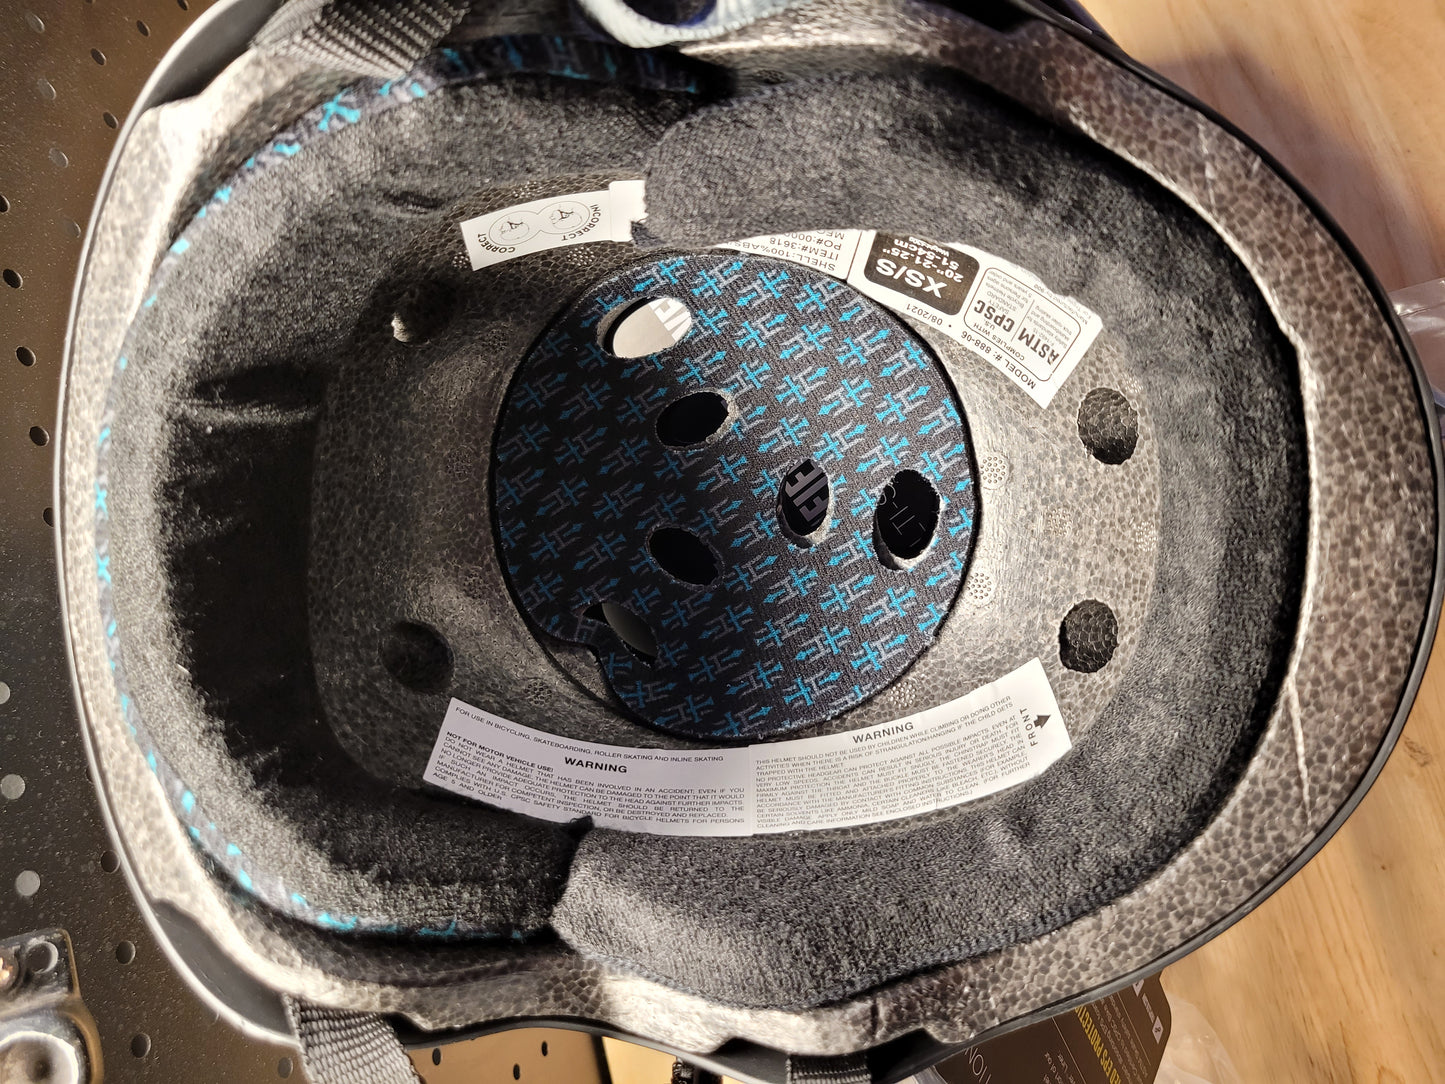 Triple Eight - Lizzie Armanto Signature Edition Certified Sweatsaver Helmet